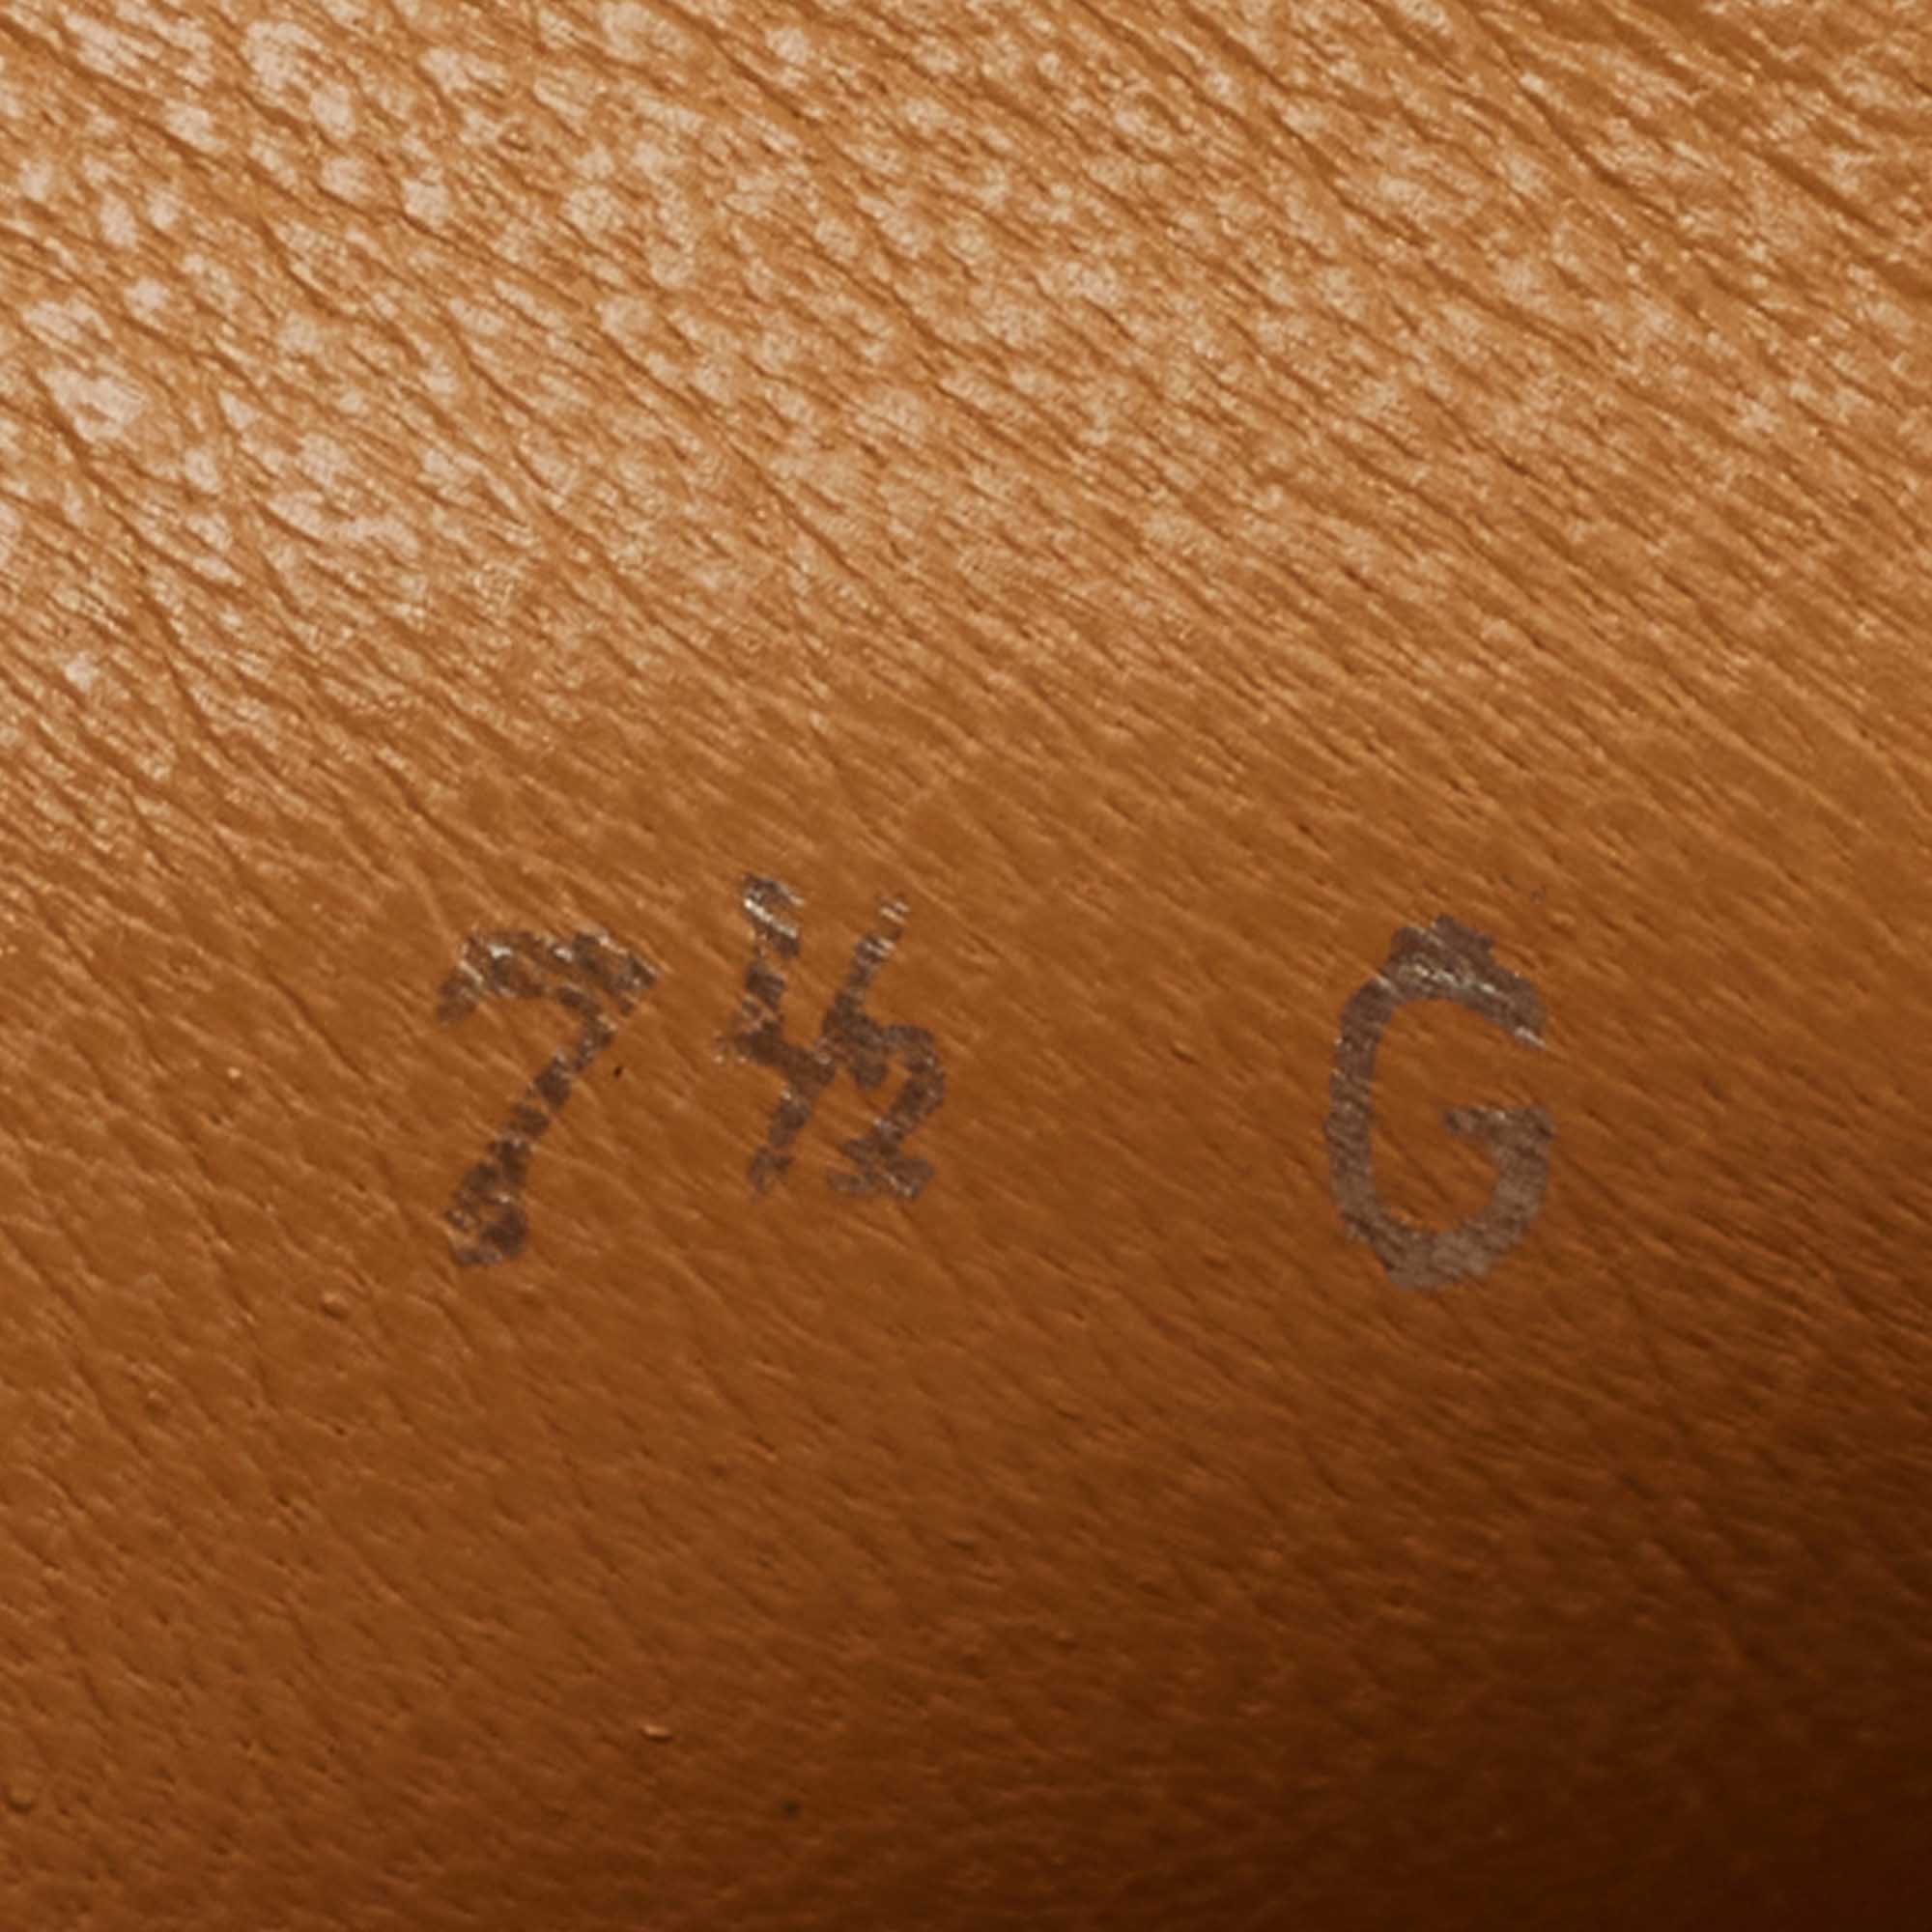 Gucci Sky Blue Suede Horsebit Slip On Loafers Size 41.5